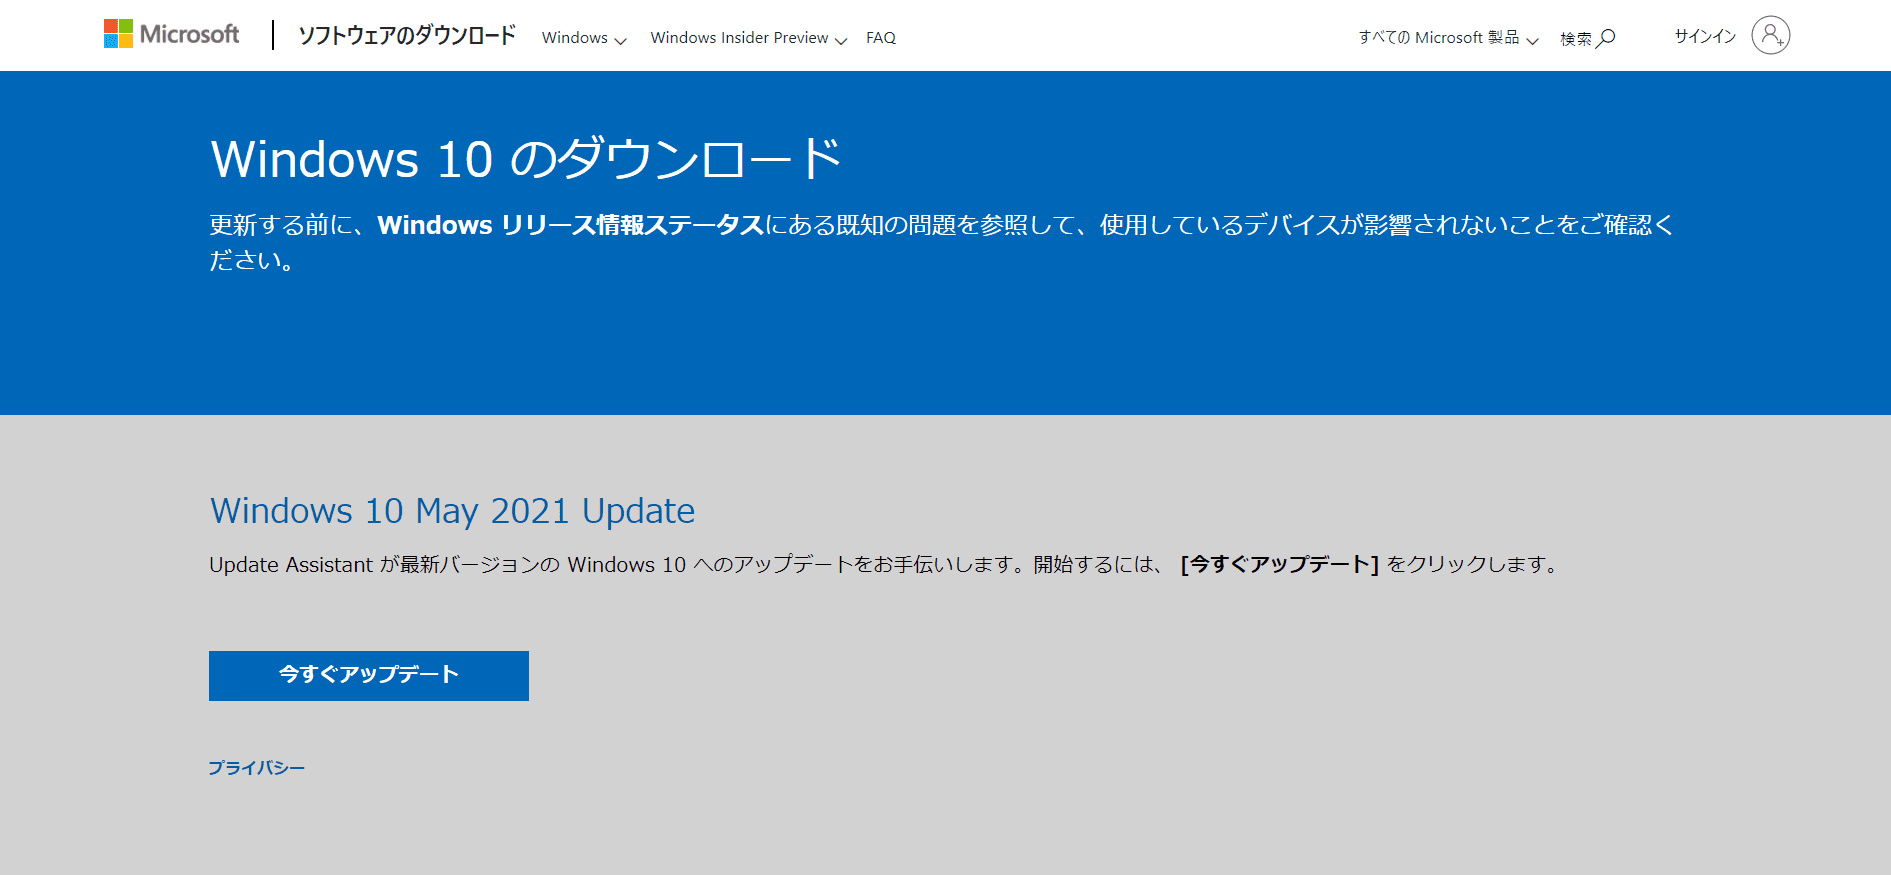 「Windows 10 更新アシスタント」を利用する